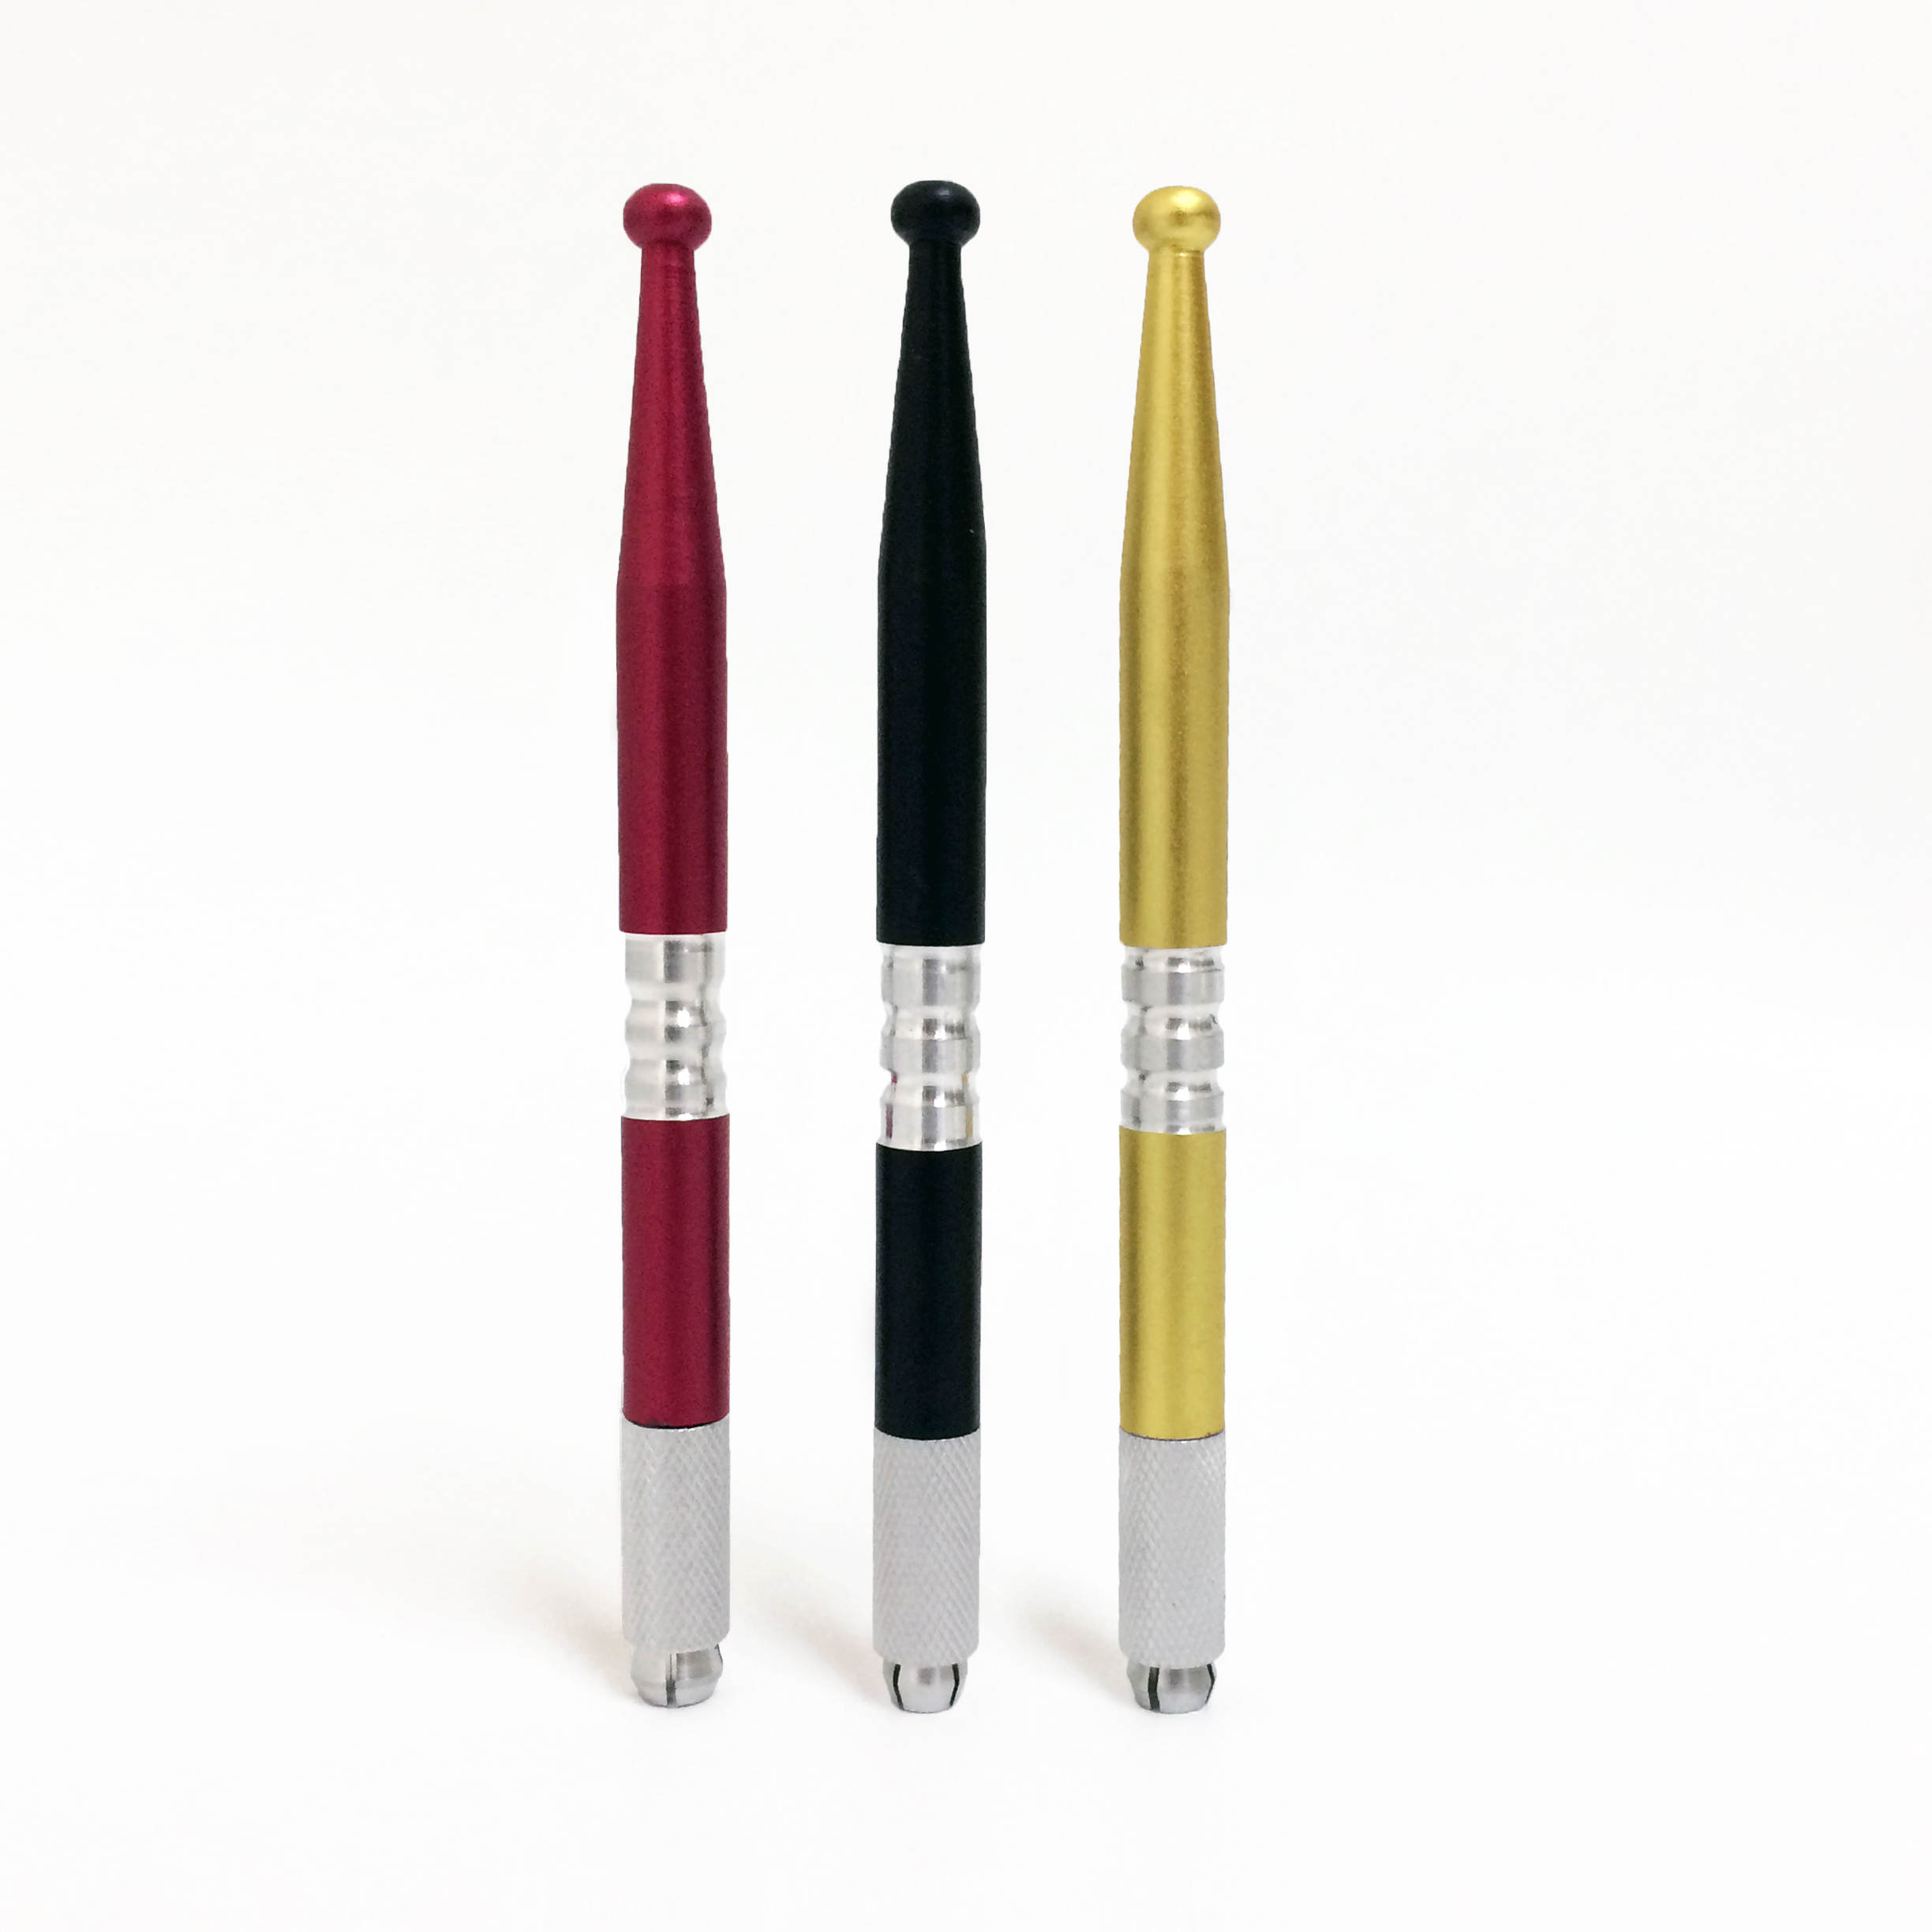 BoLin-Eyebrow Tattoo Pen Manufacturer Colorful Microblading Manual Pen